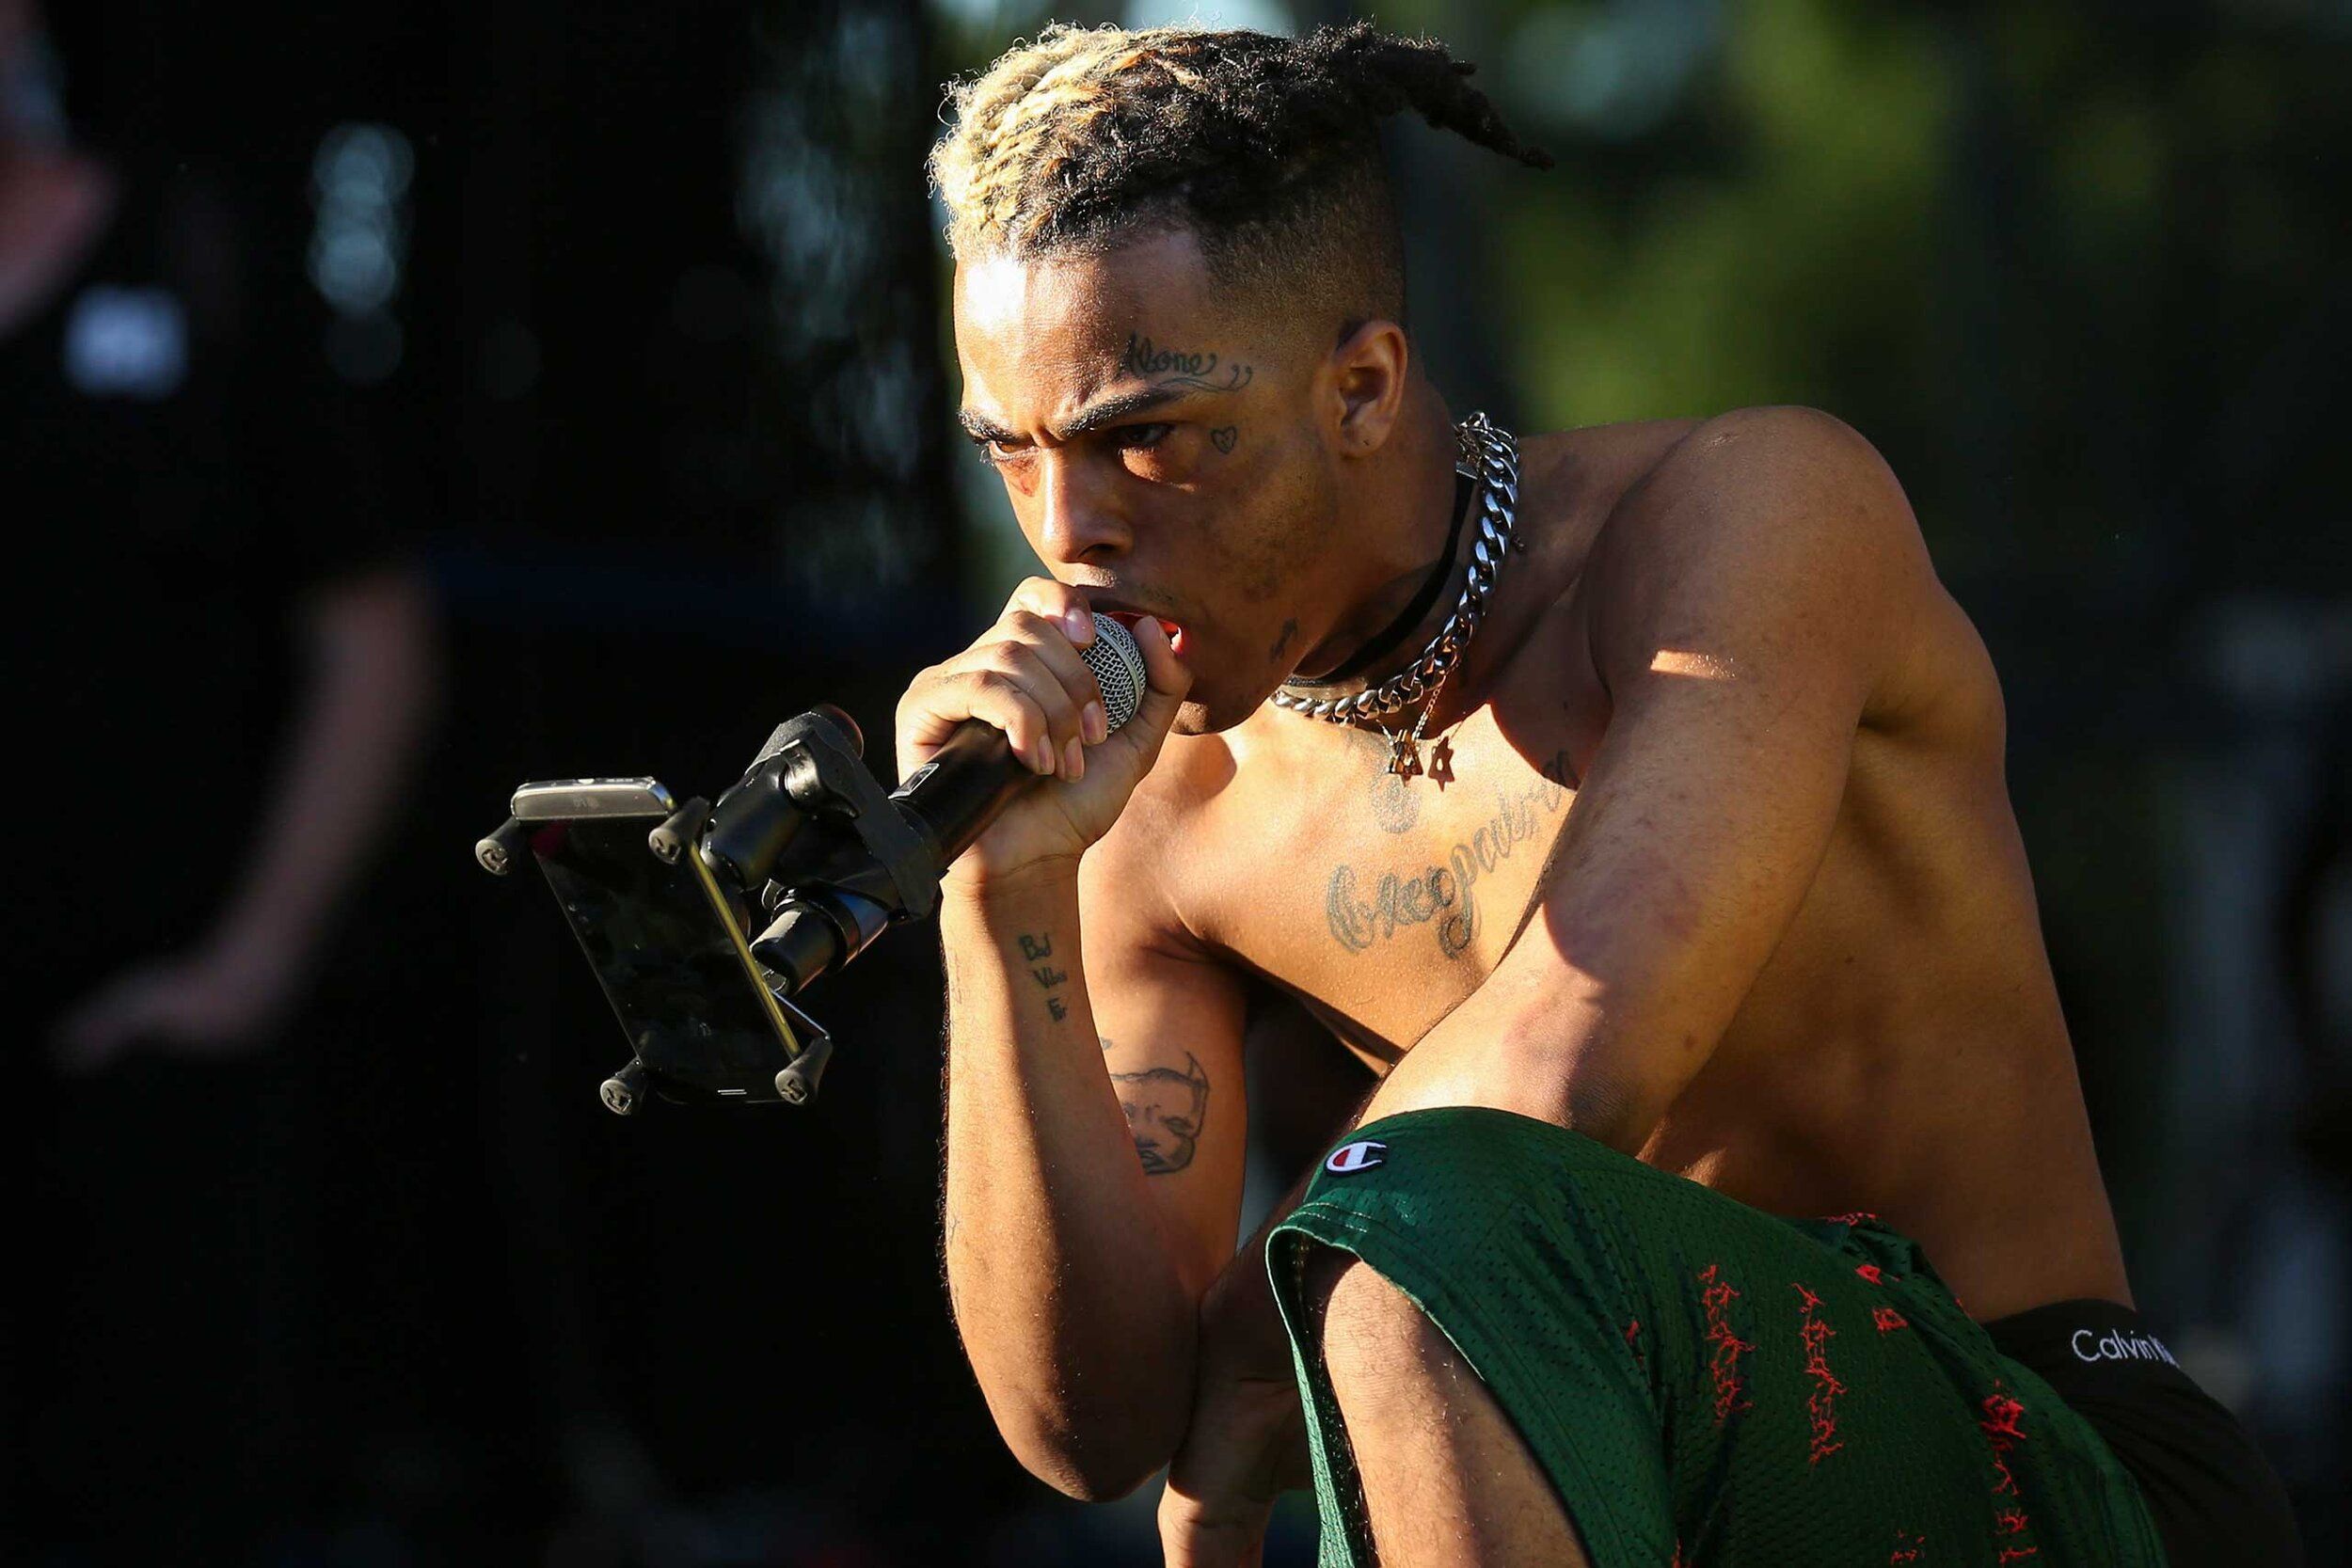 Rapper XXXTentacion performs at the Rolling Loud festival in Miami in 2018. - XXXTentacion